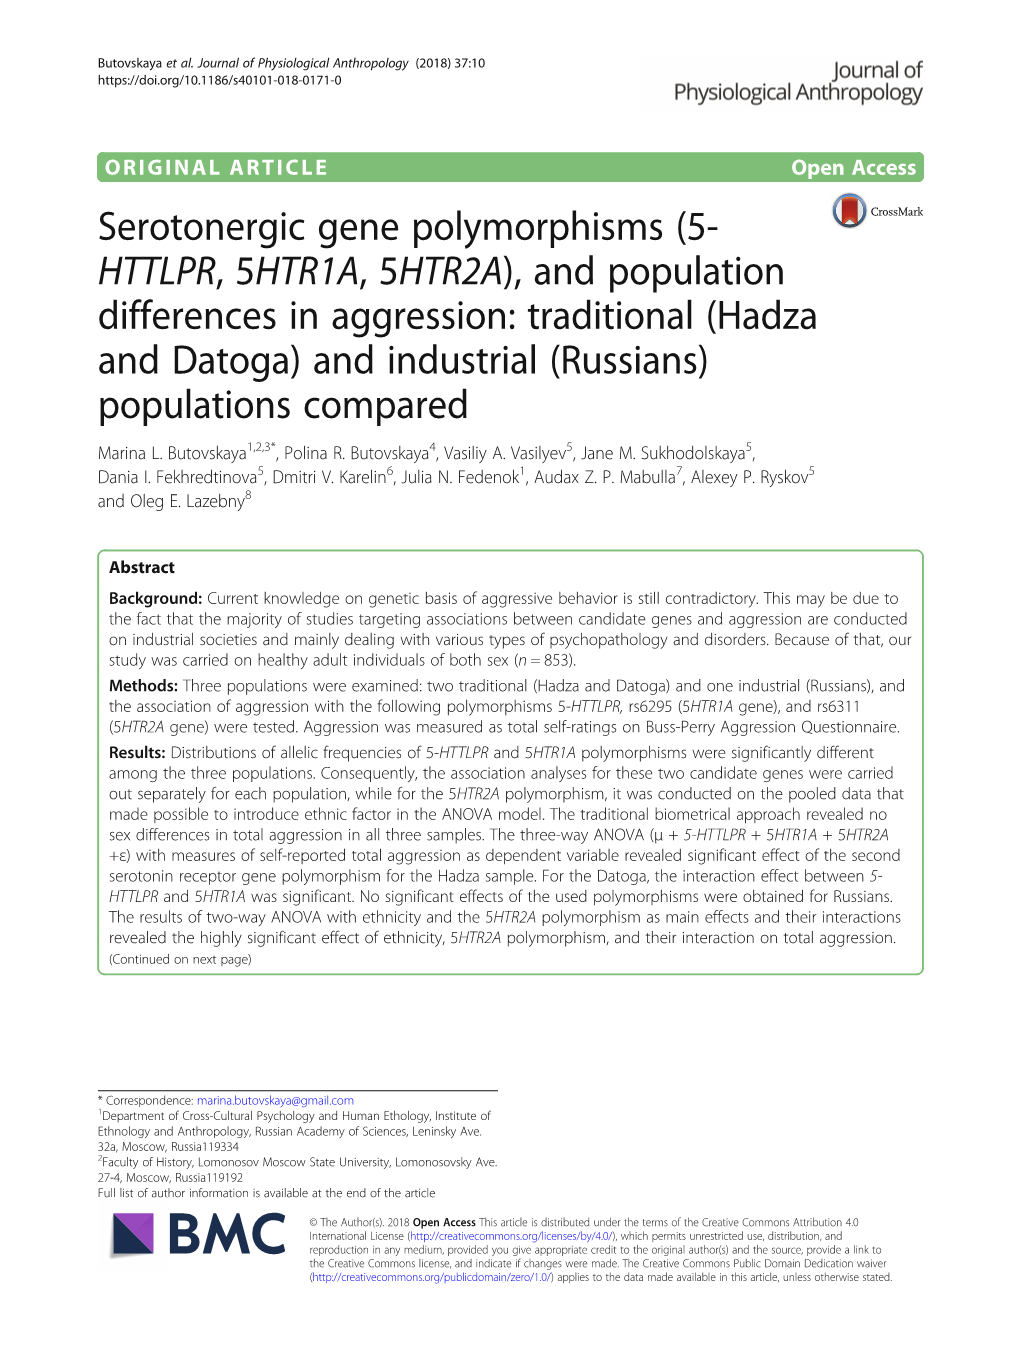 Serotonergic Gene Polymorphisms (5-HTTLPR, 5HTR1A, 5HTR2A